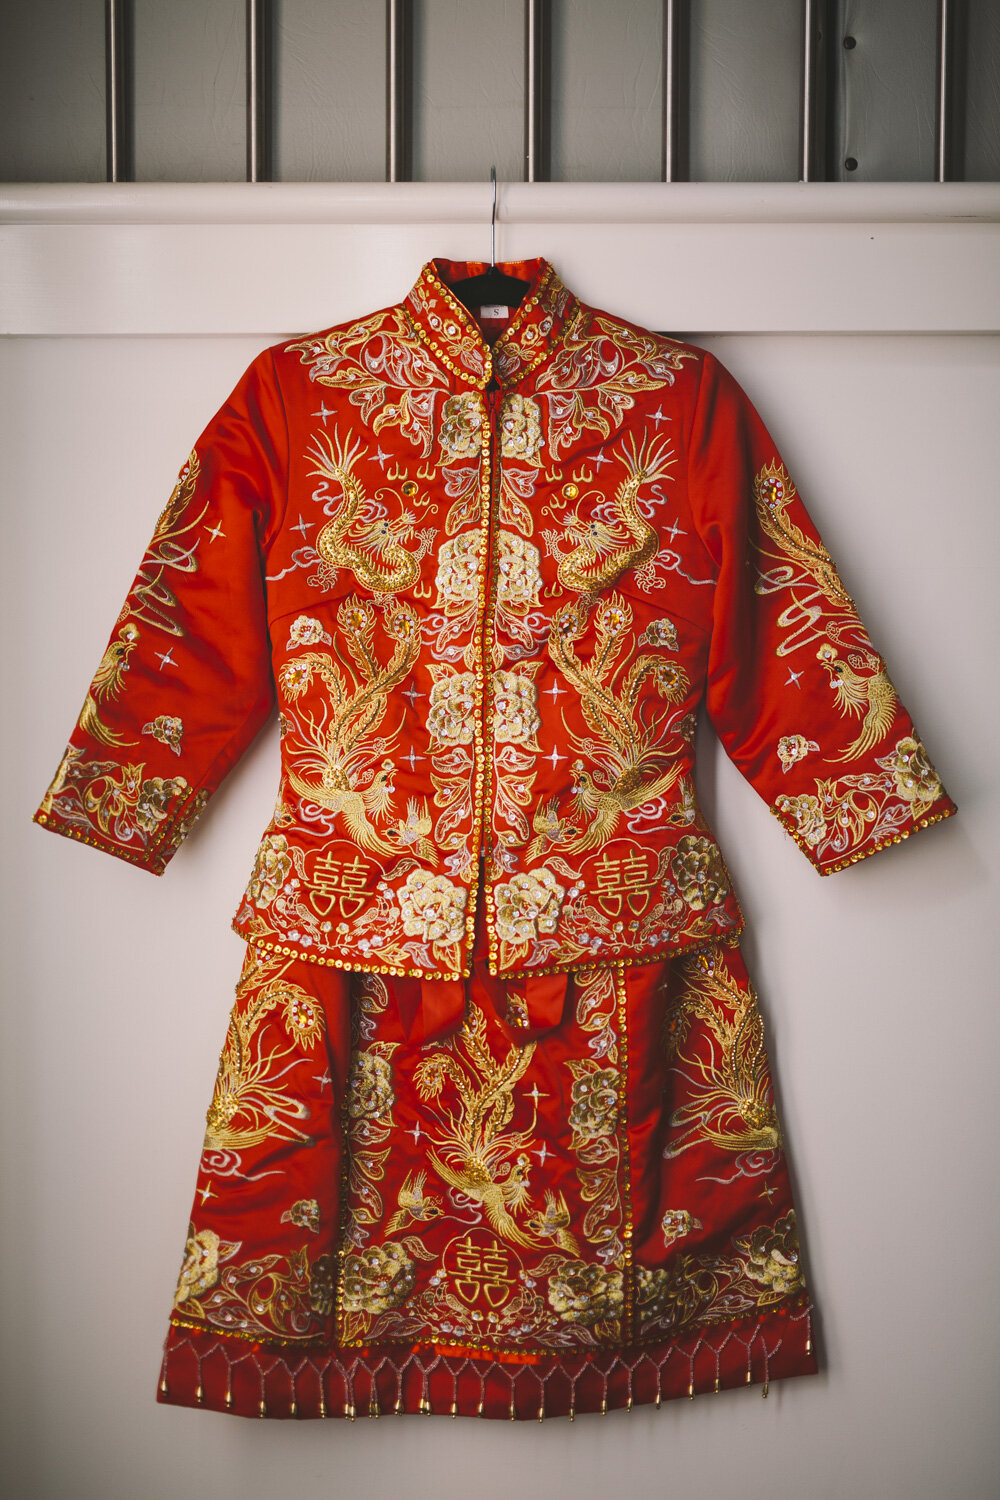 Chinese wedding attire